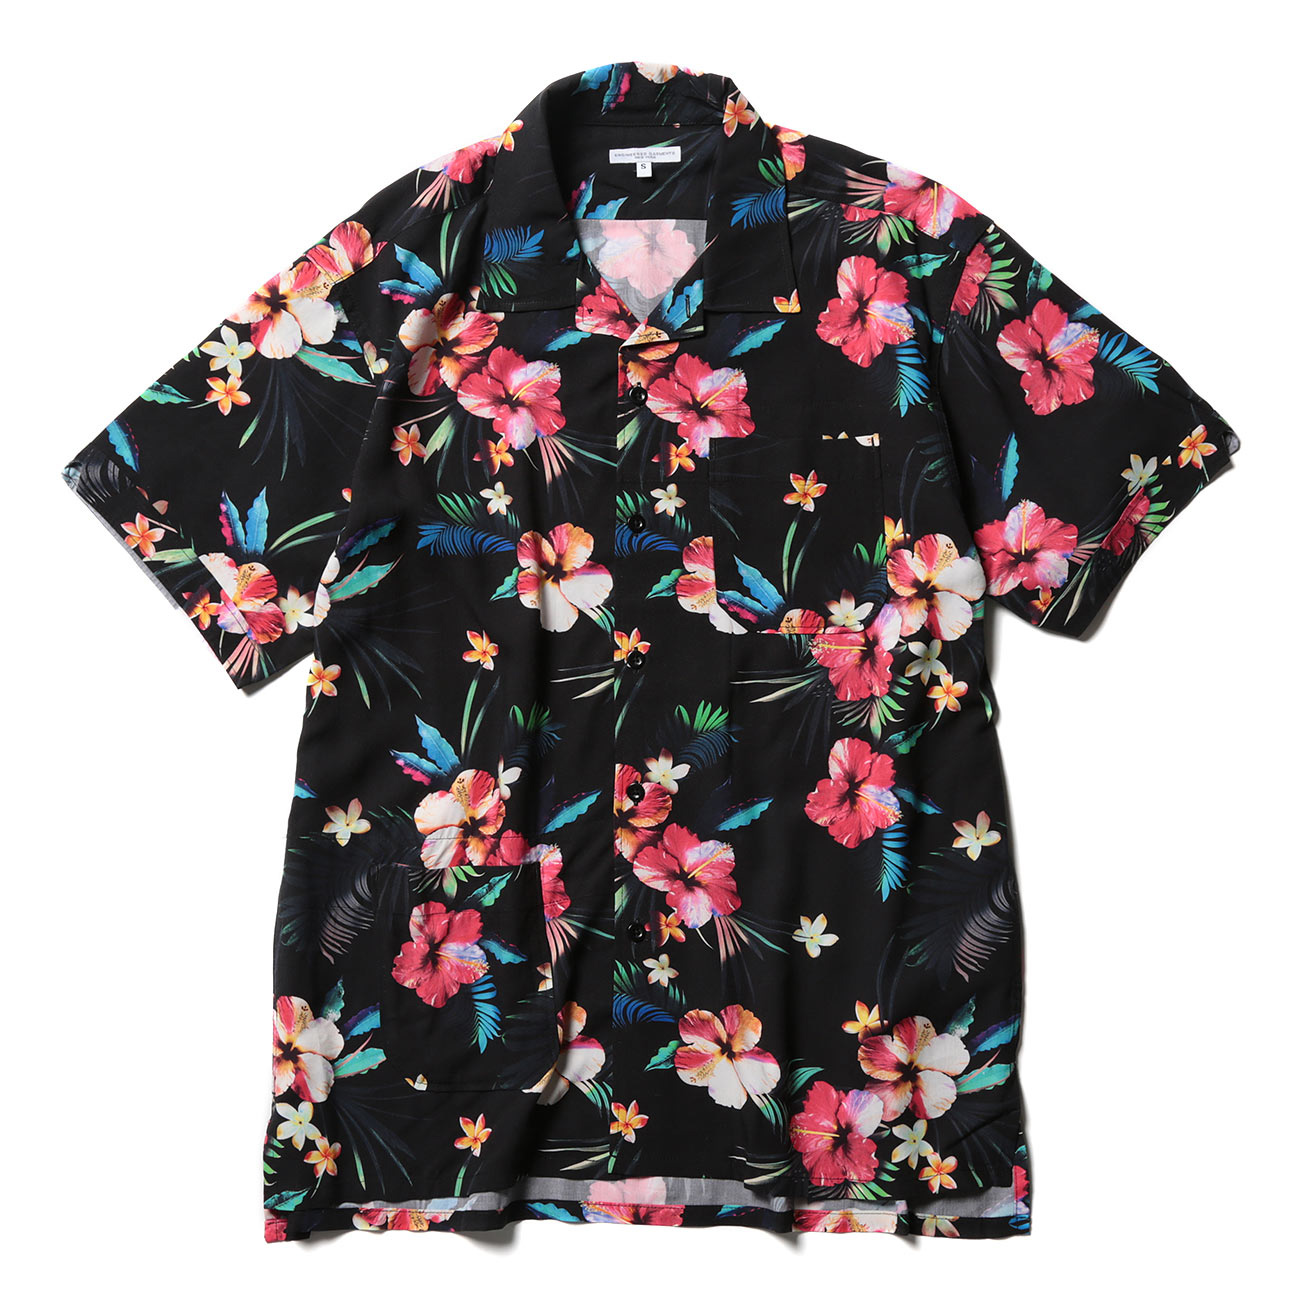 Camp Shirt - Tropical Floral Print Rayon - Black